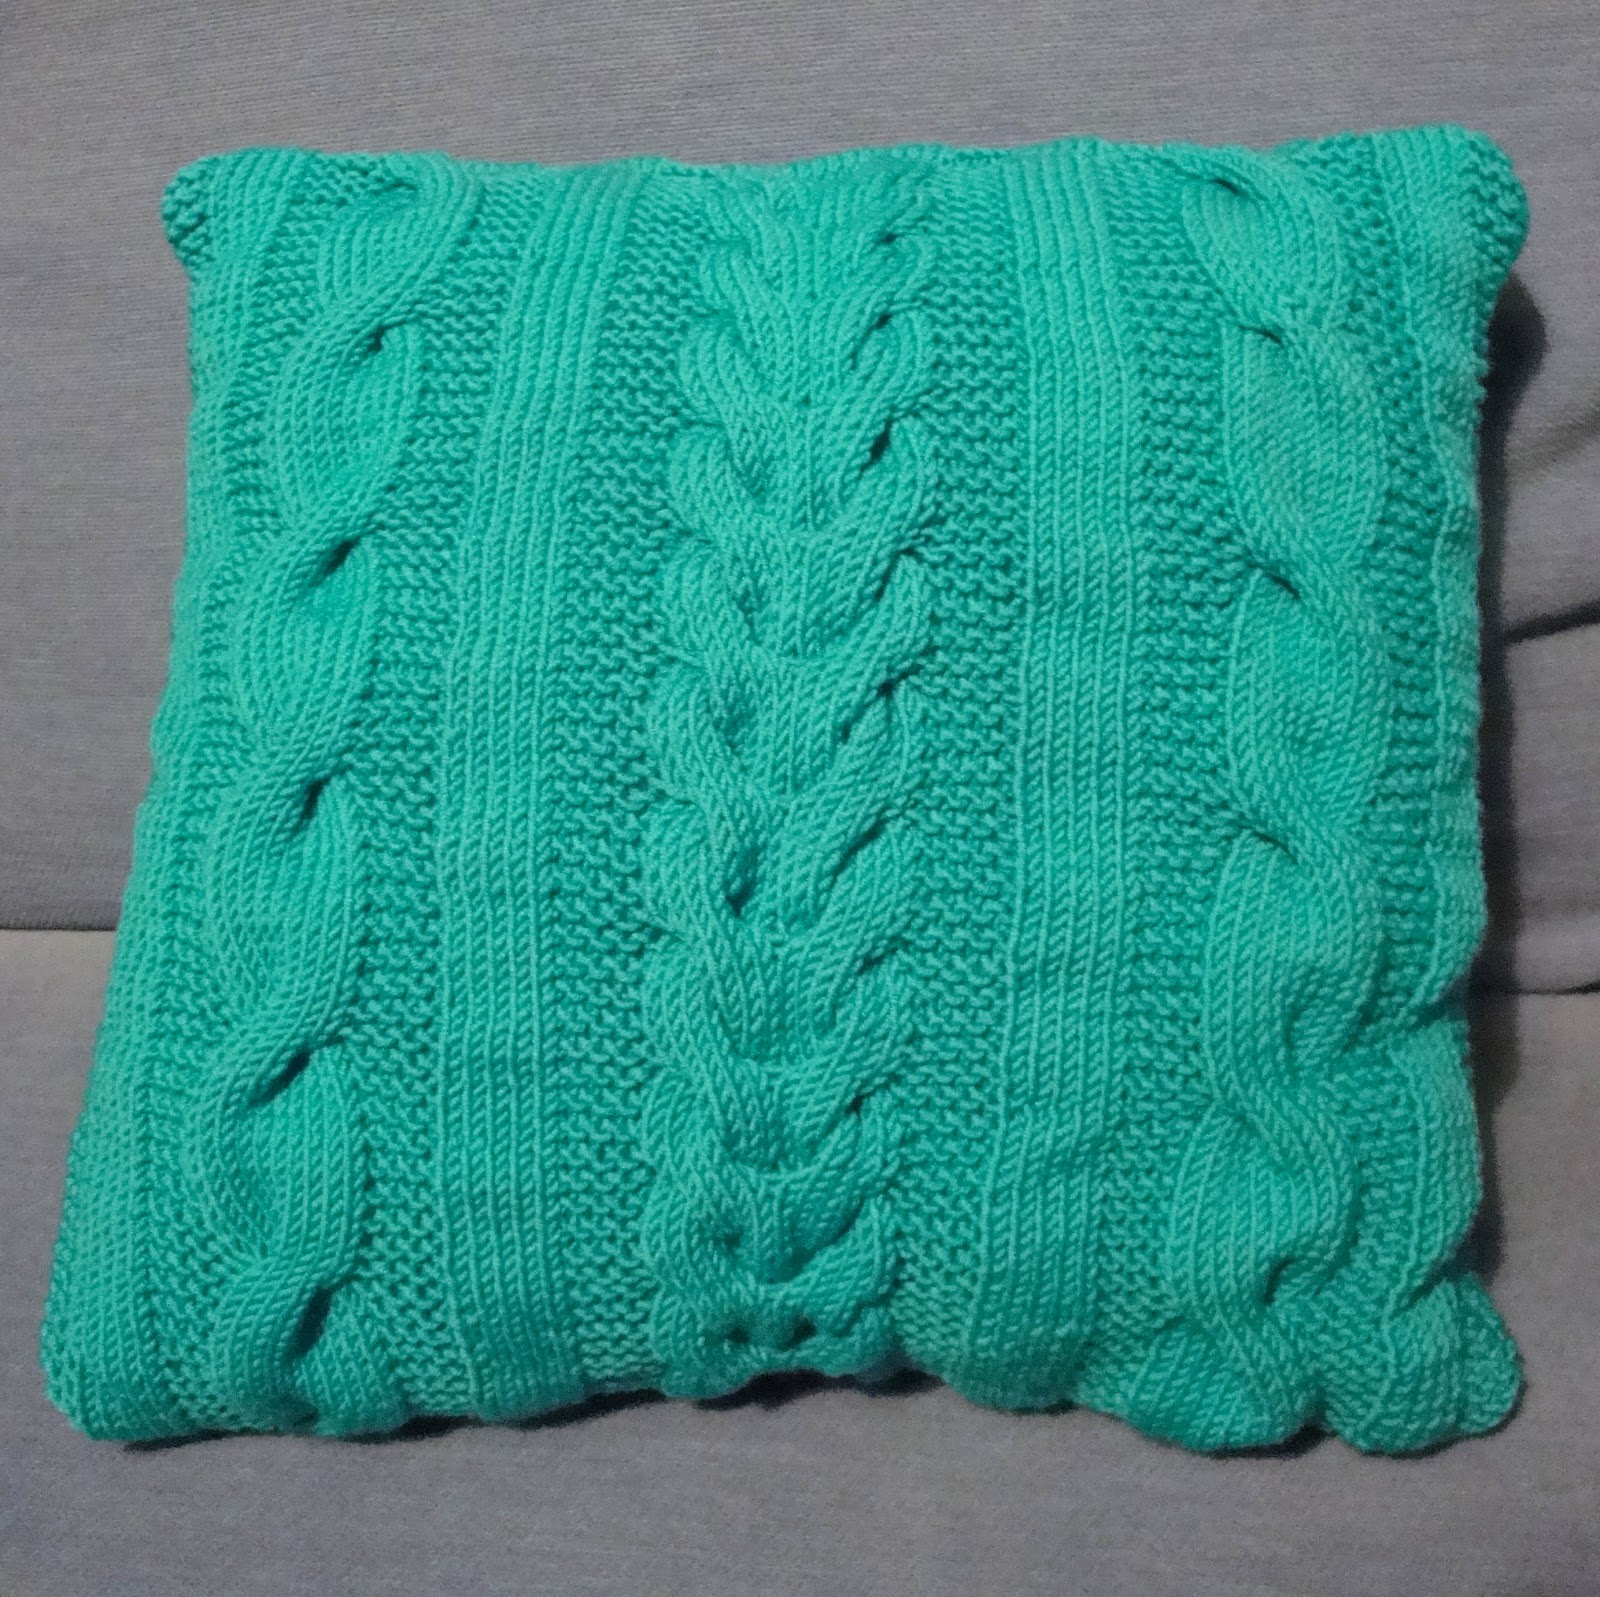 The light boat: Knitting cushions